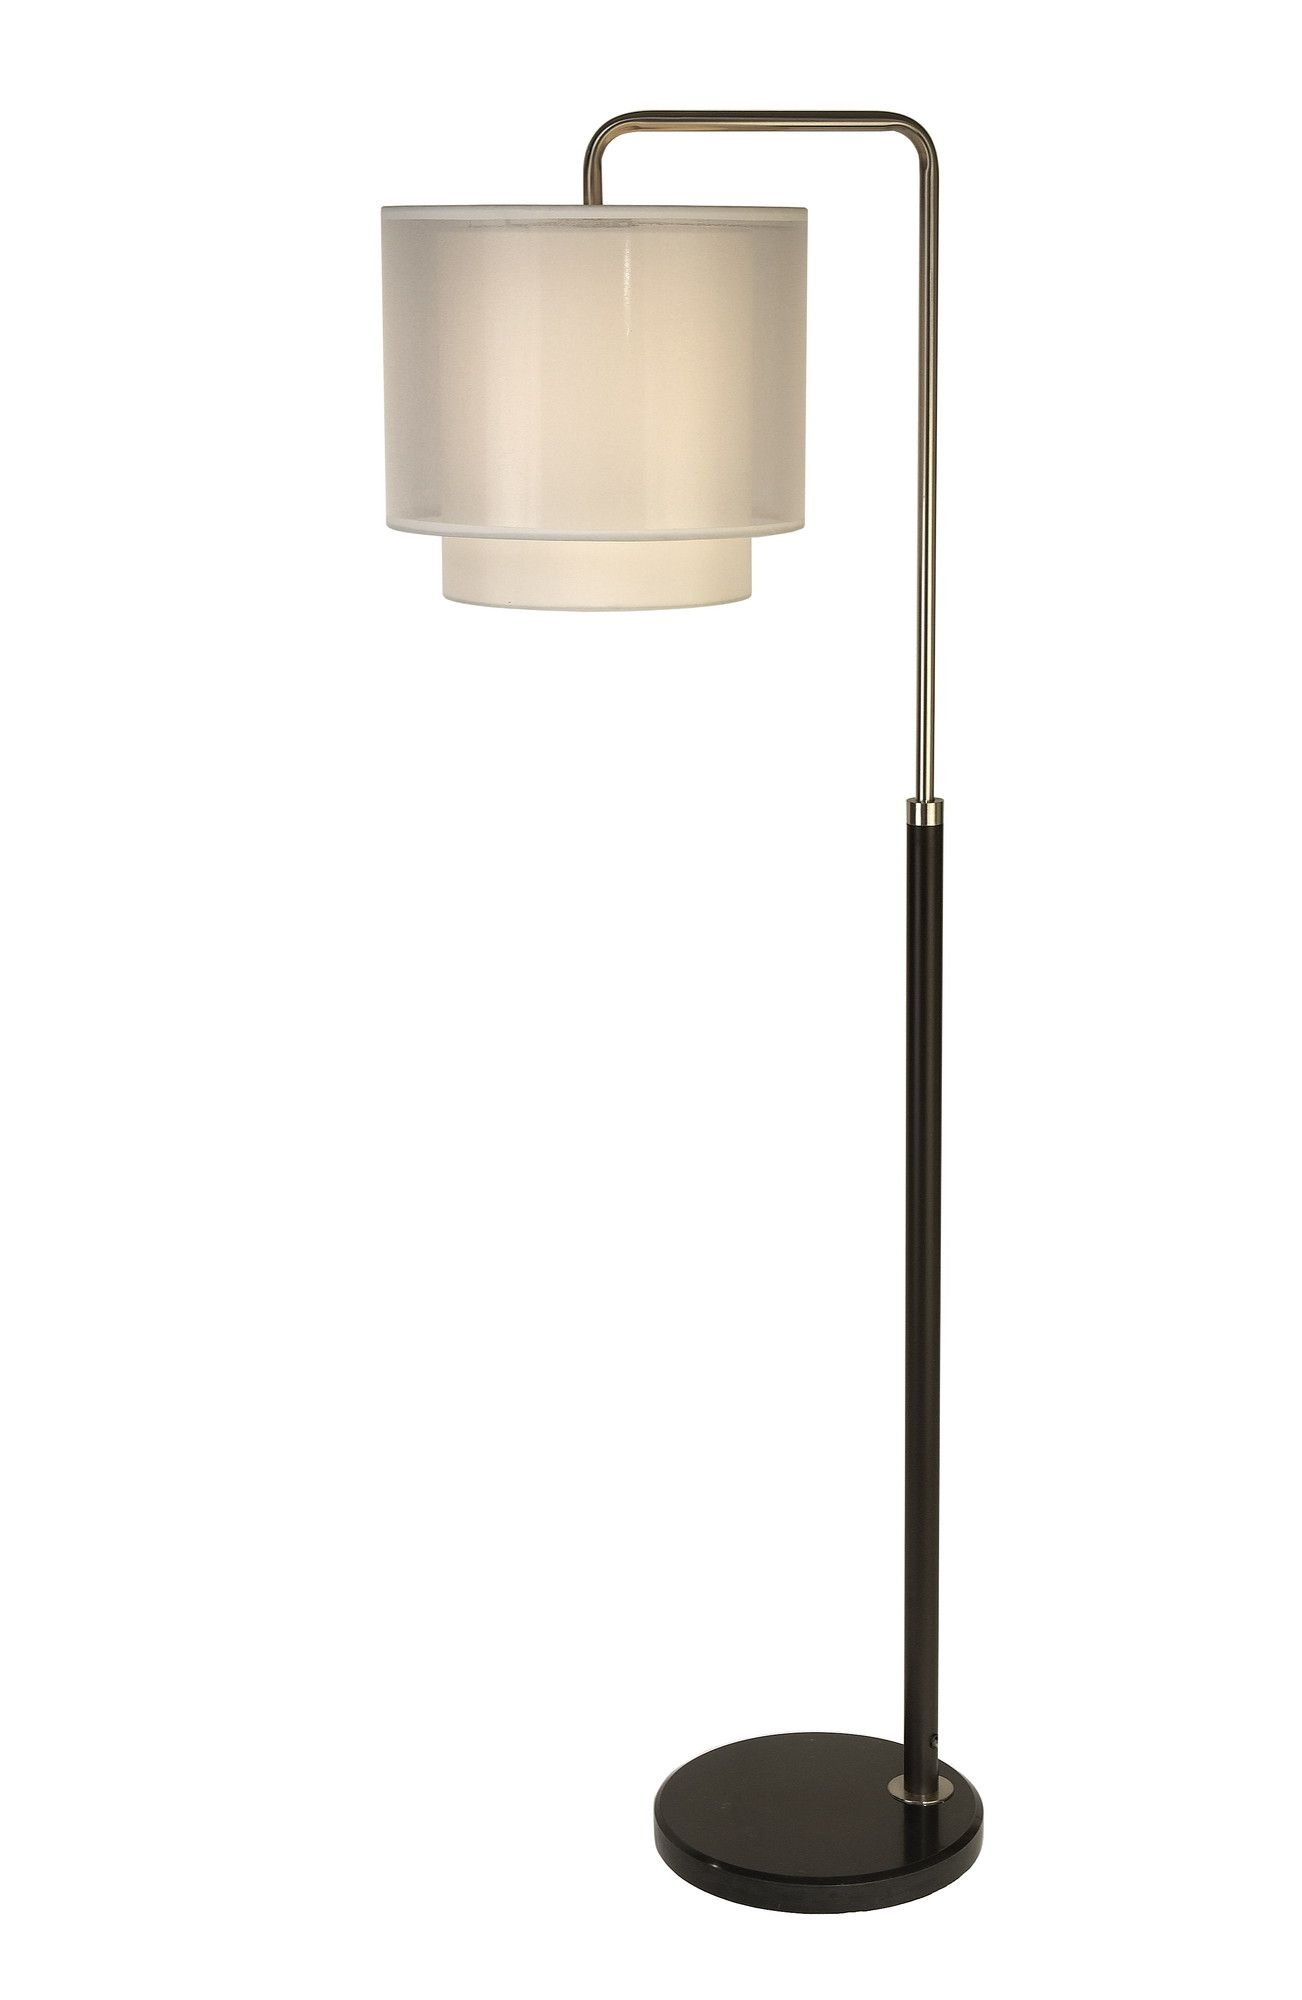 Trend Lighting Corp Roosevelt Floor Lamp Allmodern Ffe with size 1302 X 2000